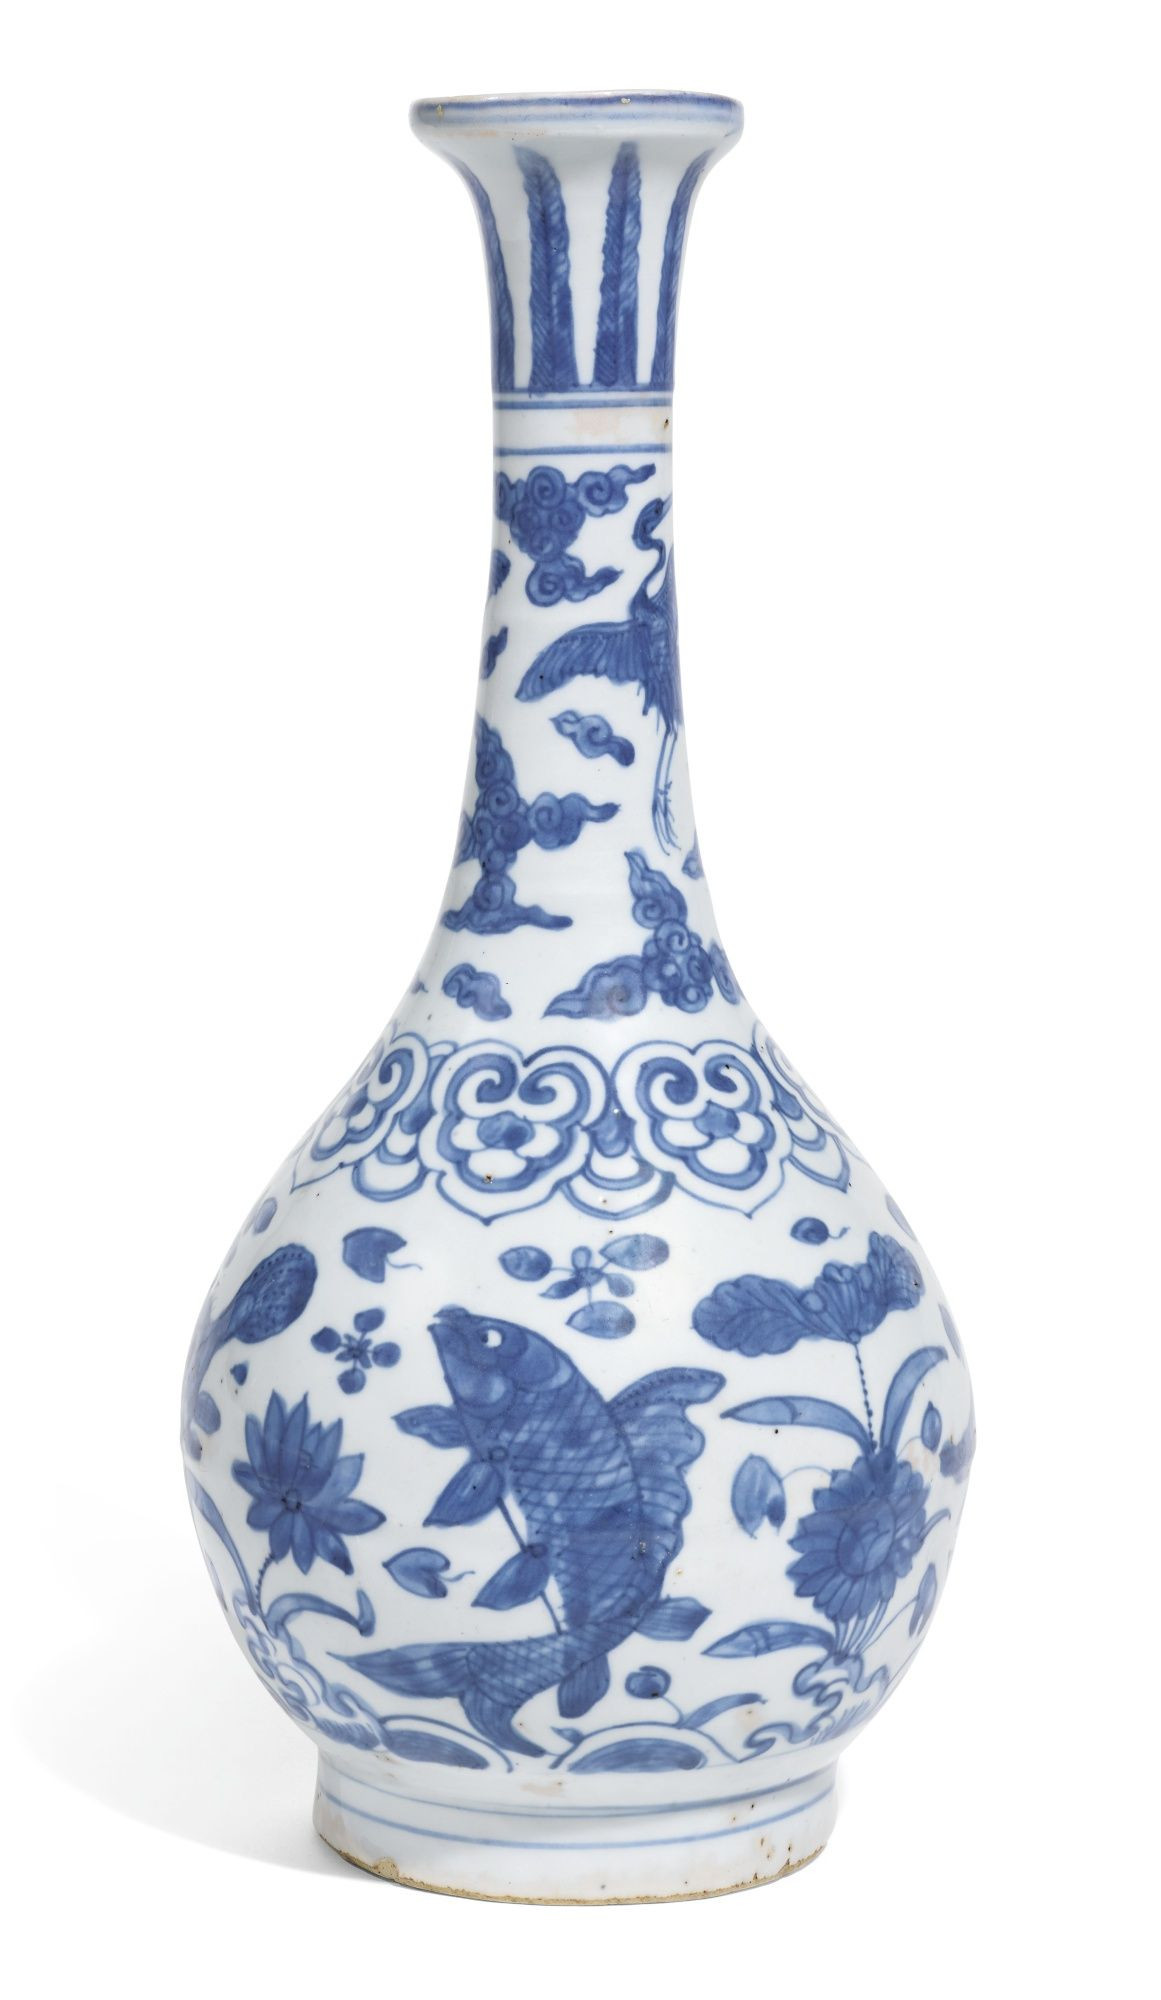 19 Unique Blue White Porcelain Vase 2024 free download blue white porcelain vase of a blue and white bottle vase ming dynasty jiajing wanli period inside a blue and white bottle vase ming dynasty jiajing wanli period